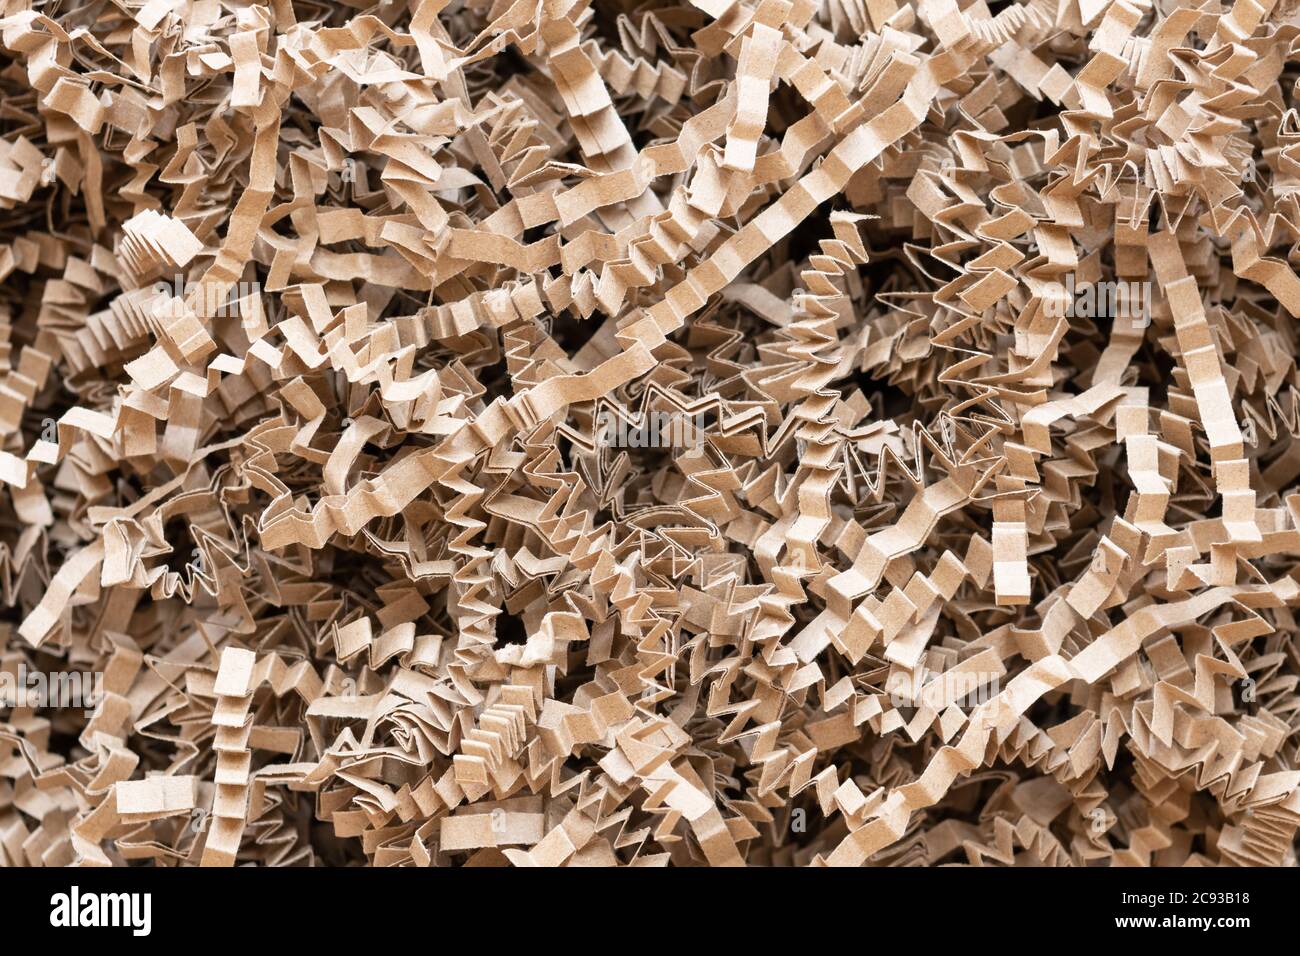 shredded paper - zig zag or crinkle cut shredded brown paper packing material Stock Photo